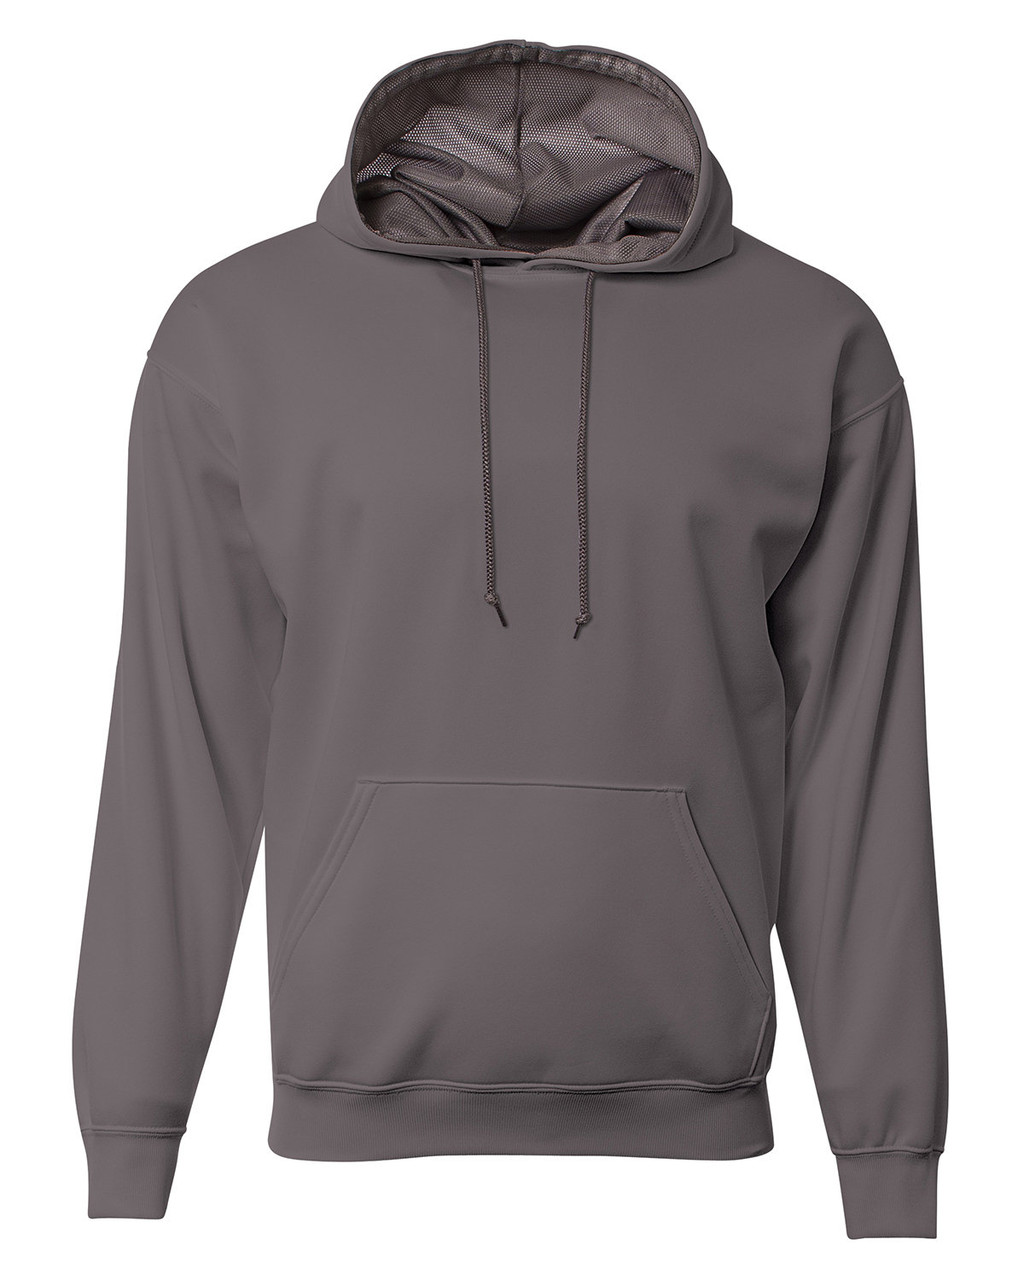 A4 N4279 Men's Sprint Tech Fleece Hooded Sweatshirt - ClothingAuthority.com